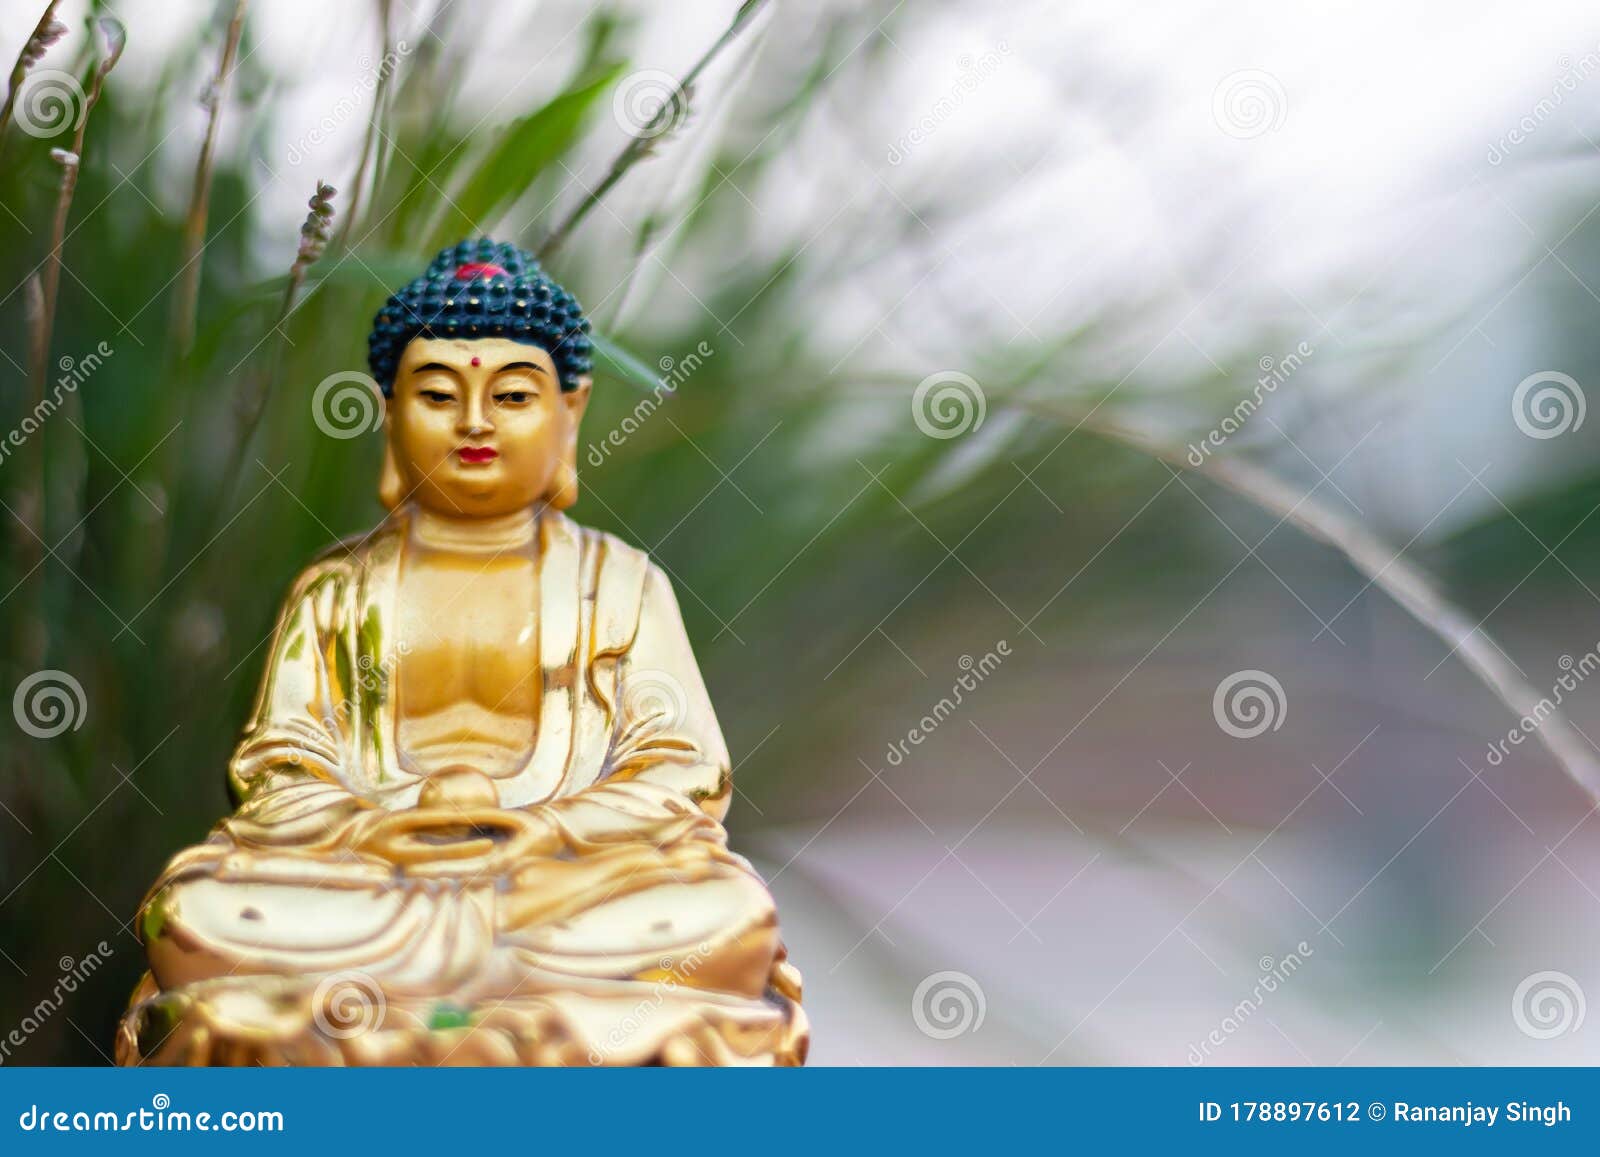 Close Up Shot of a Beautiful Buddha Statue with Green Grass ...